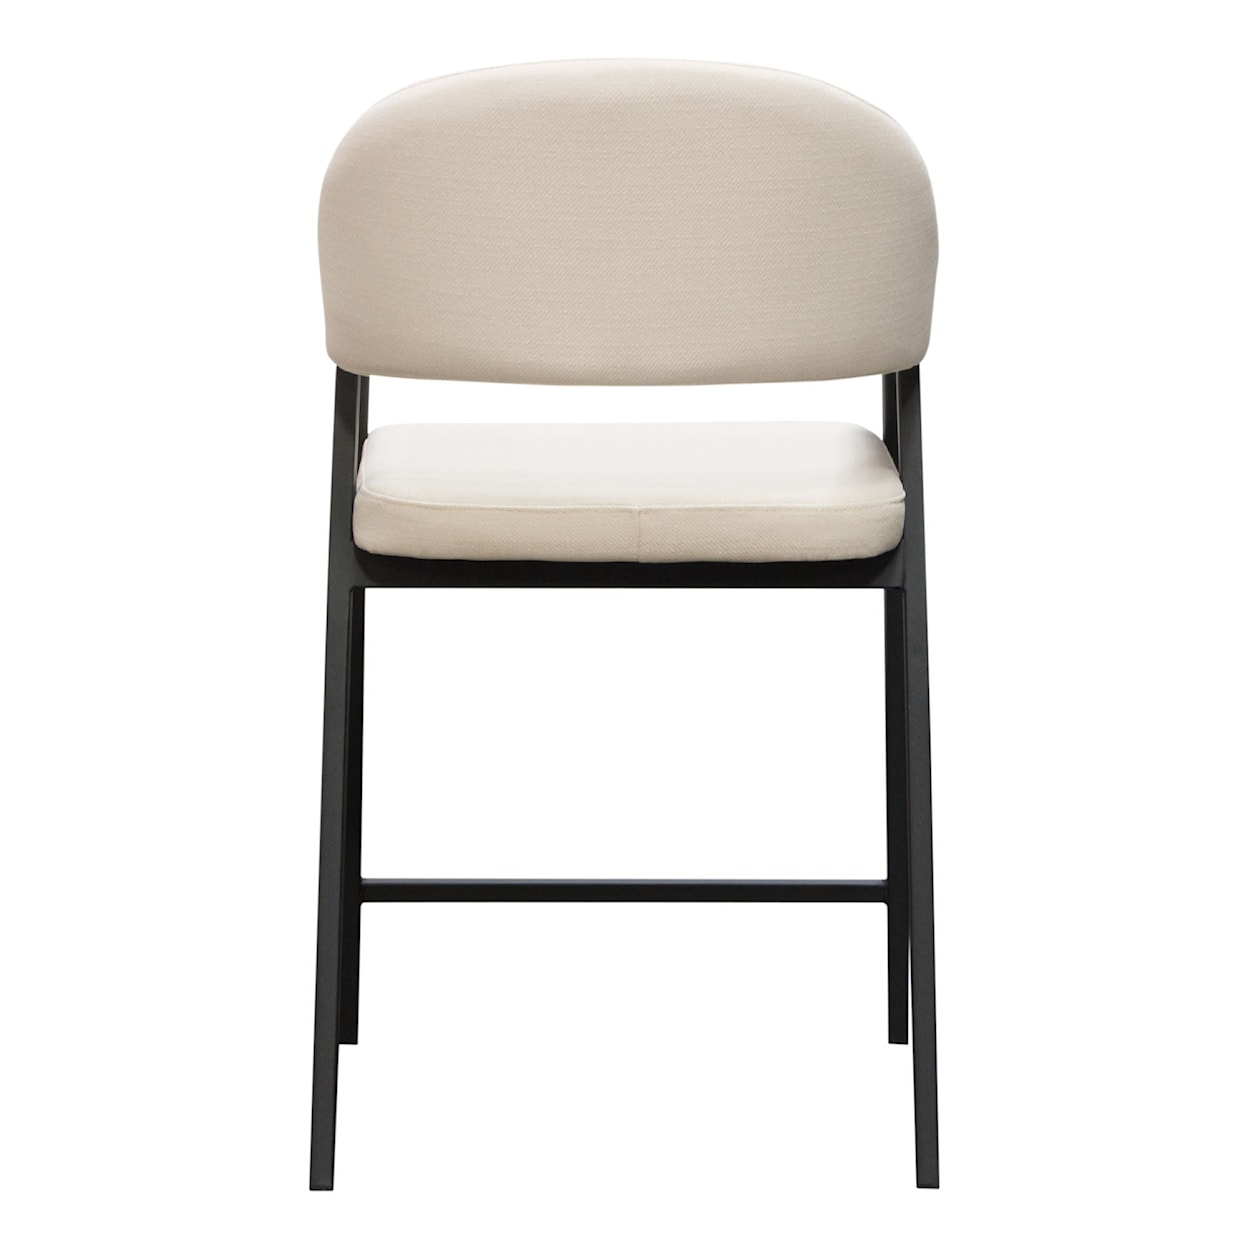 Diamond Sofa Furniture Adele Counter Height Chairs - Set Of 2